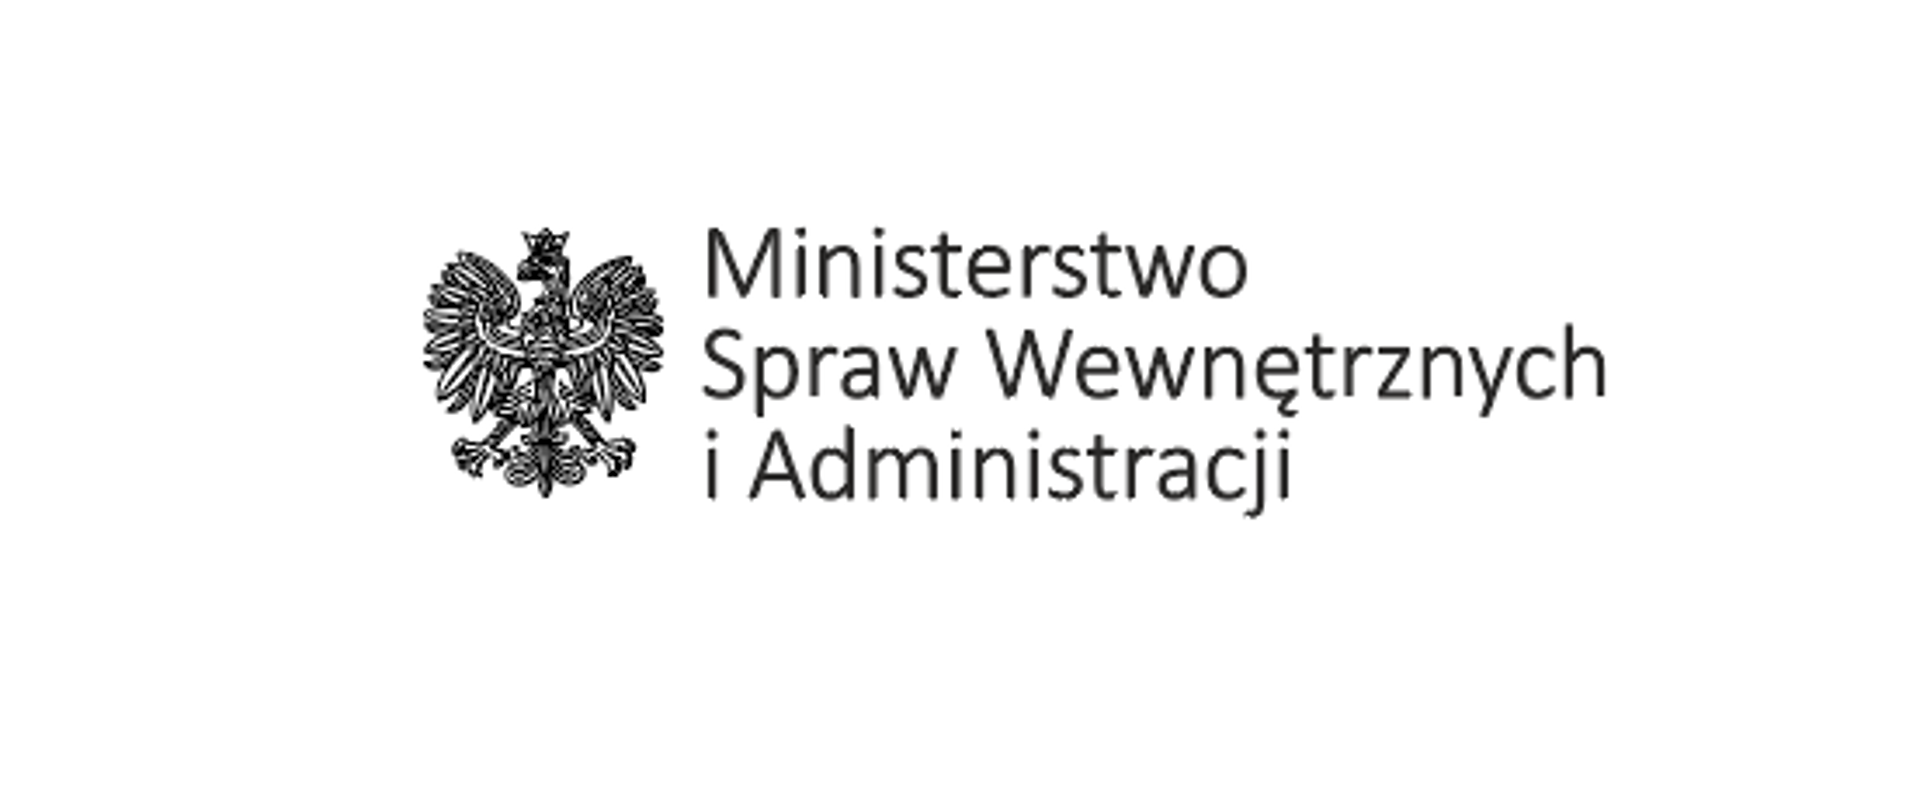 MSWIA logo